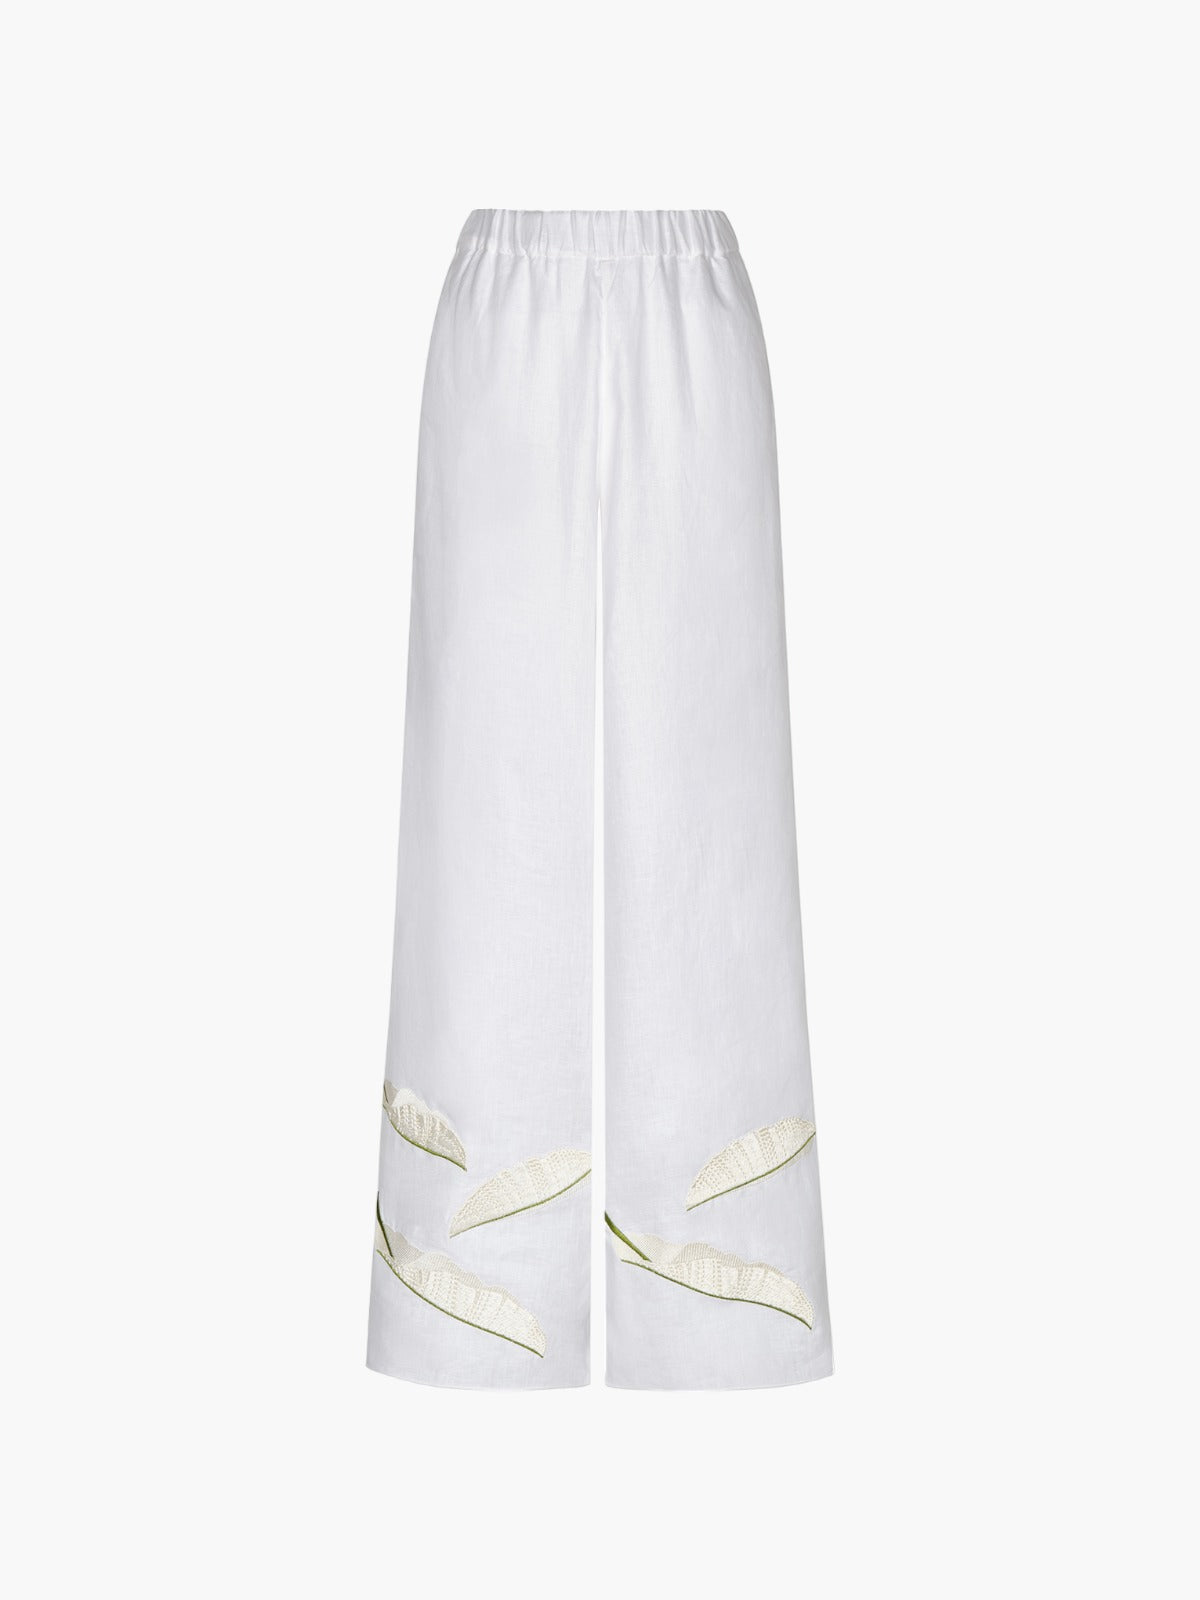 San Benito Embroidered Linen Pants | White San Benito Embroidered Linen Pants | White